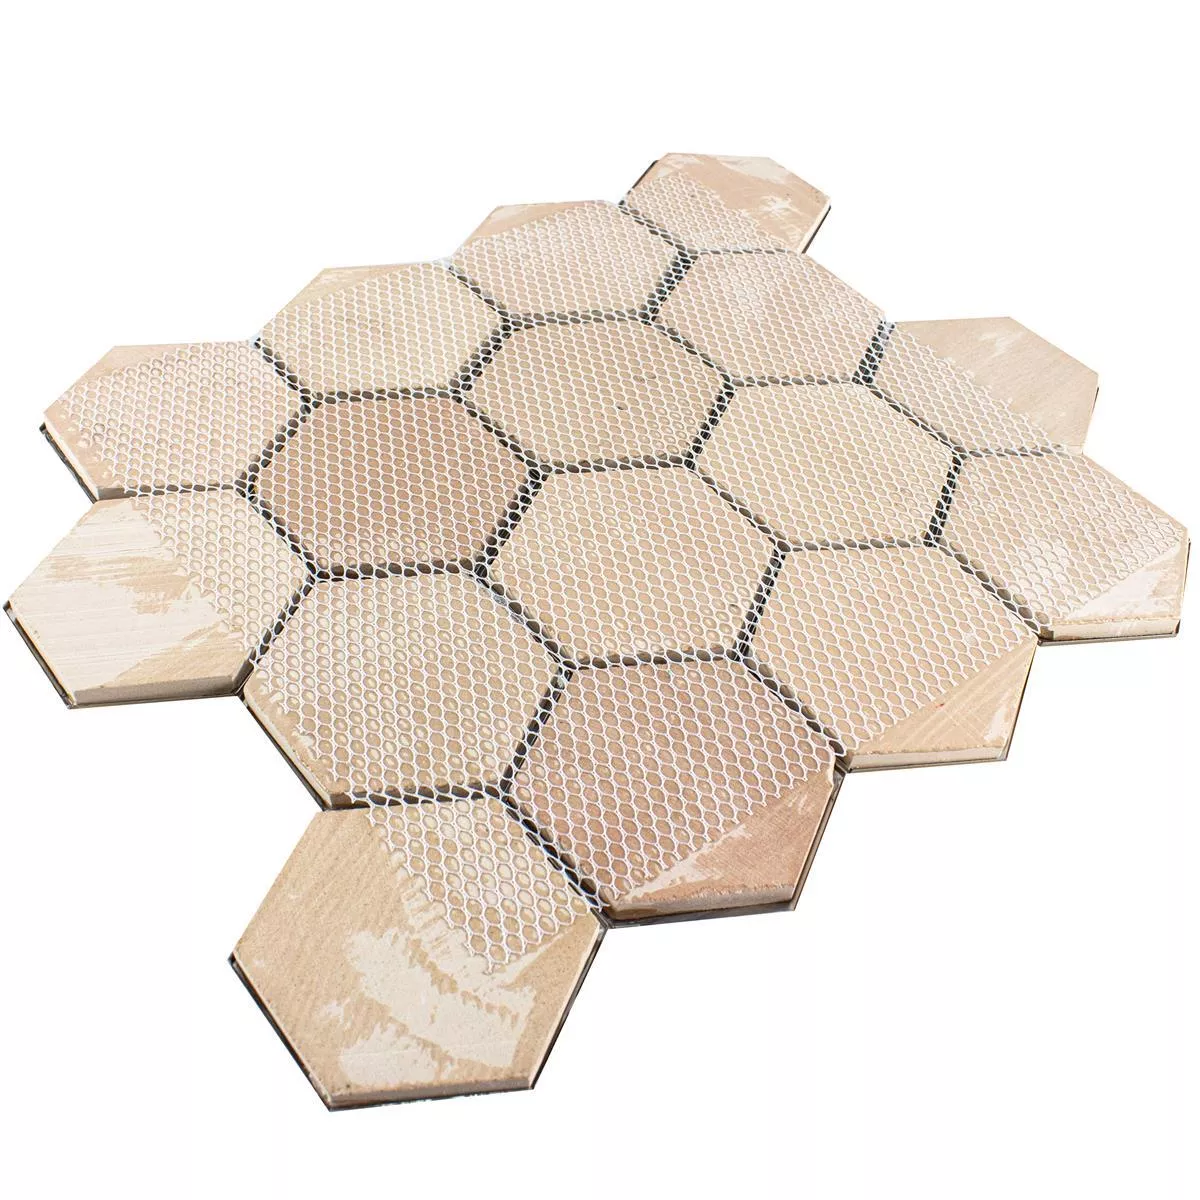 Sample Stainless Steel Mosaic Tiles Durango Hexagon 3D Brown